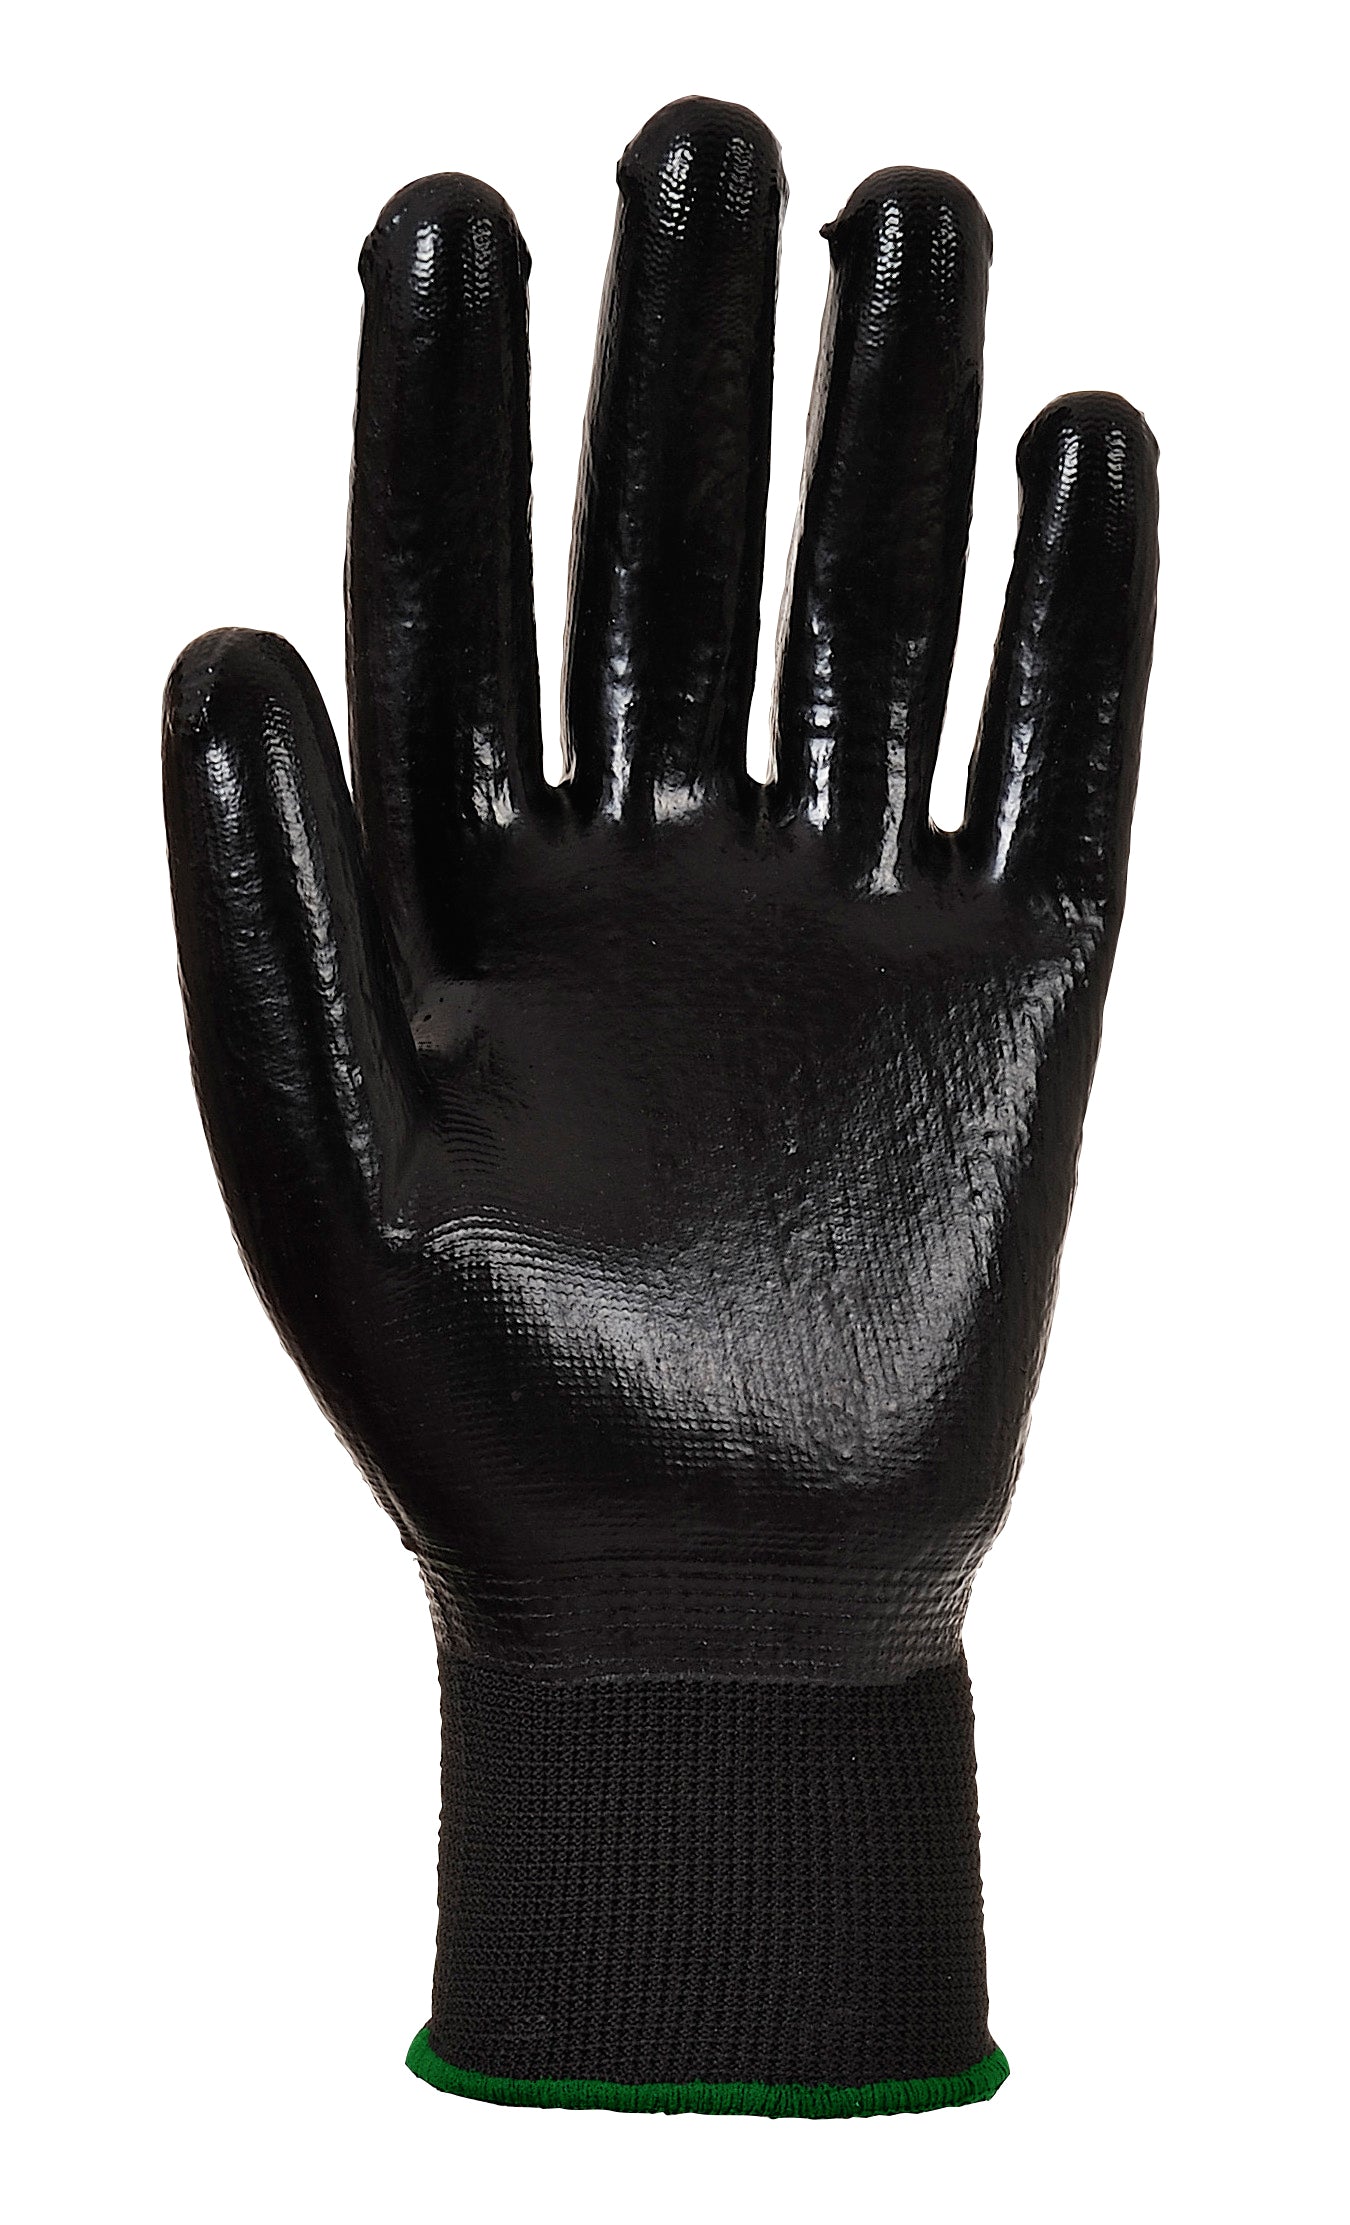 All-Flex Grip Glove Black - A315 Palm 